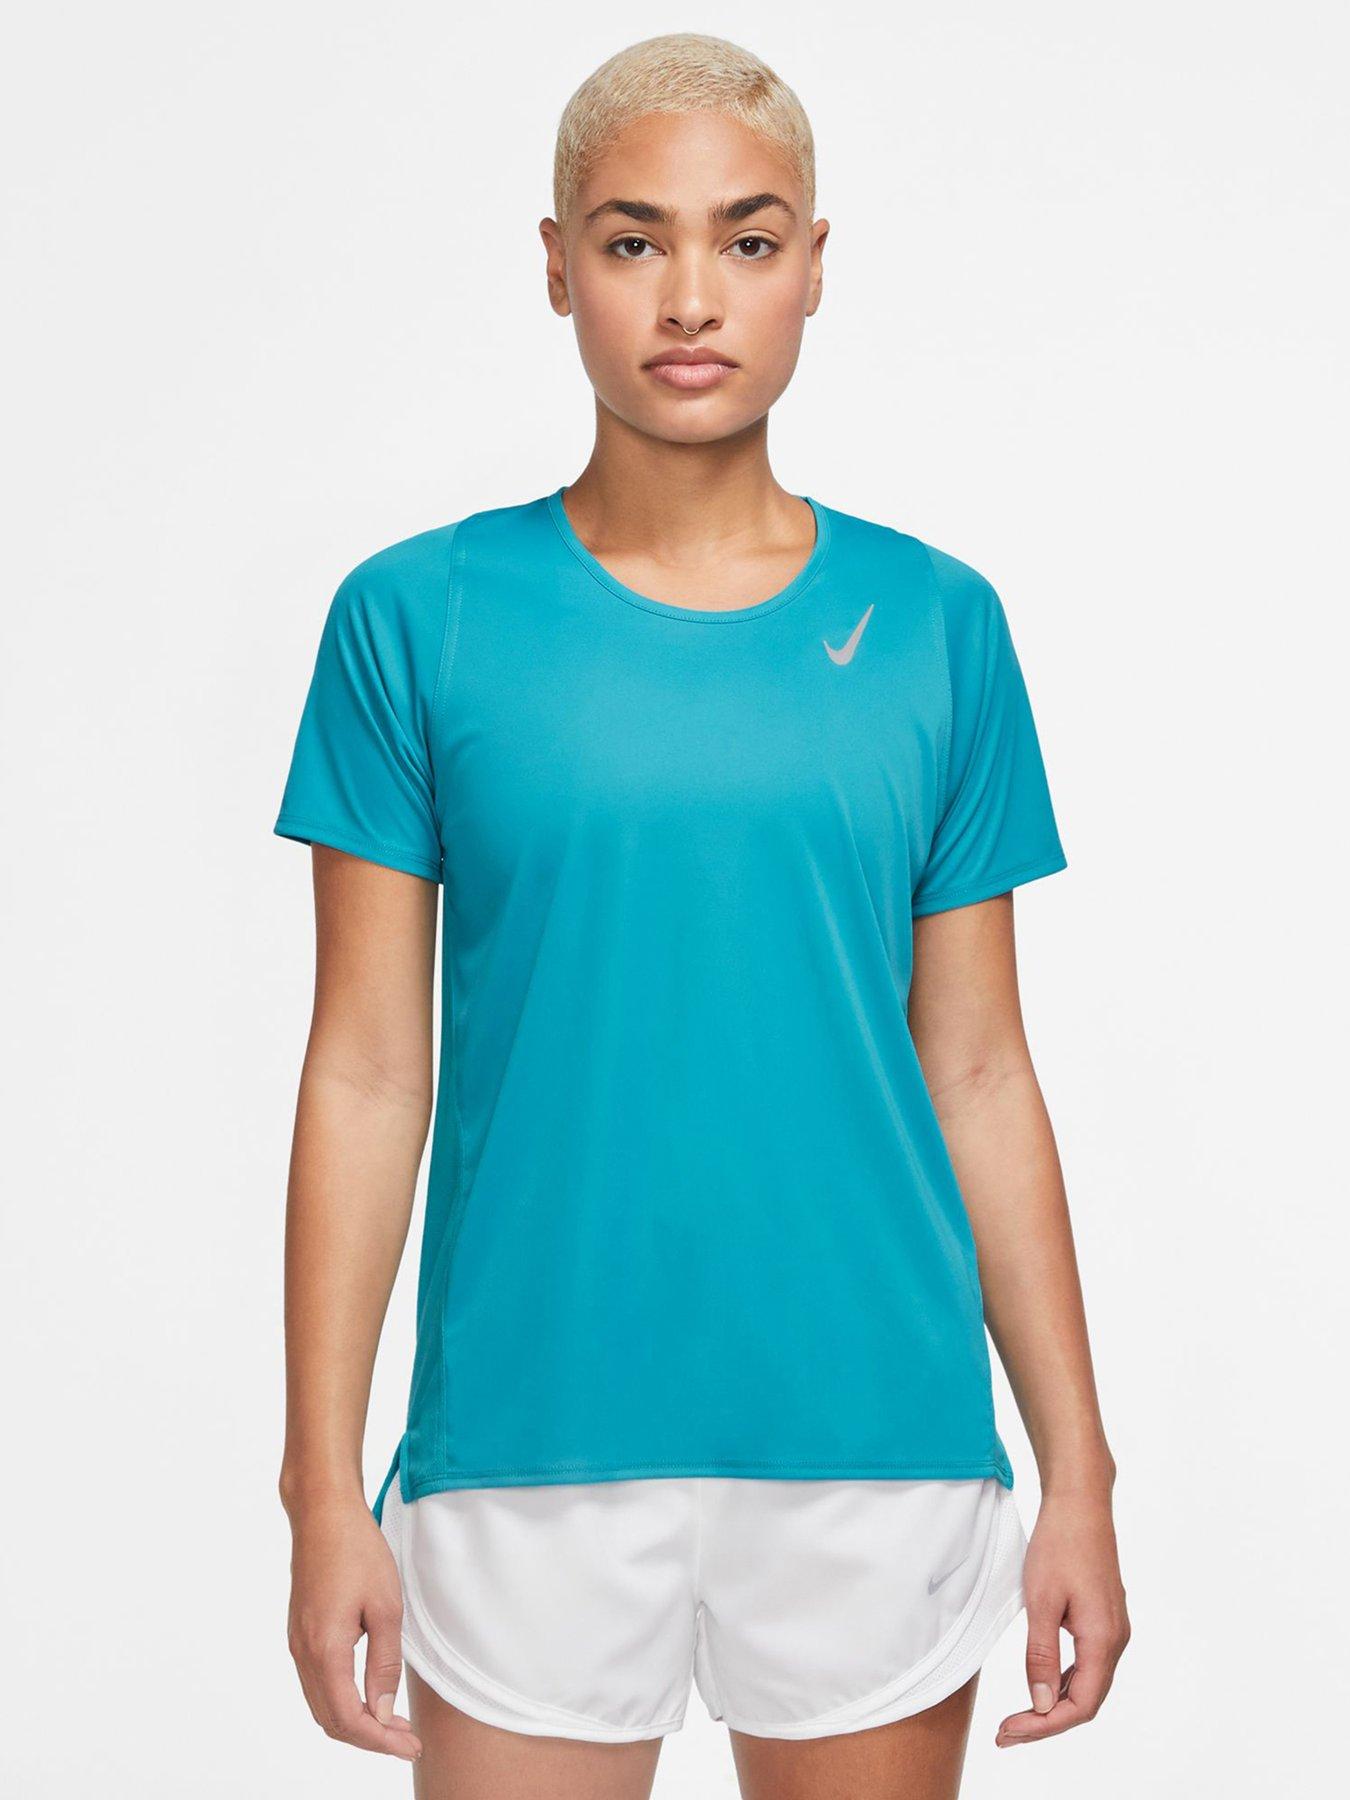 Nike Yoga Dri-FIT Luxe Women's Long-Sleeve Top - Black/Multi